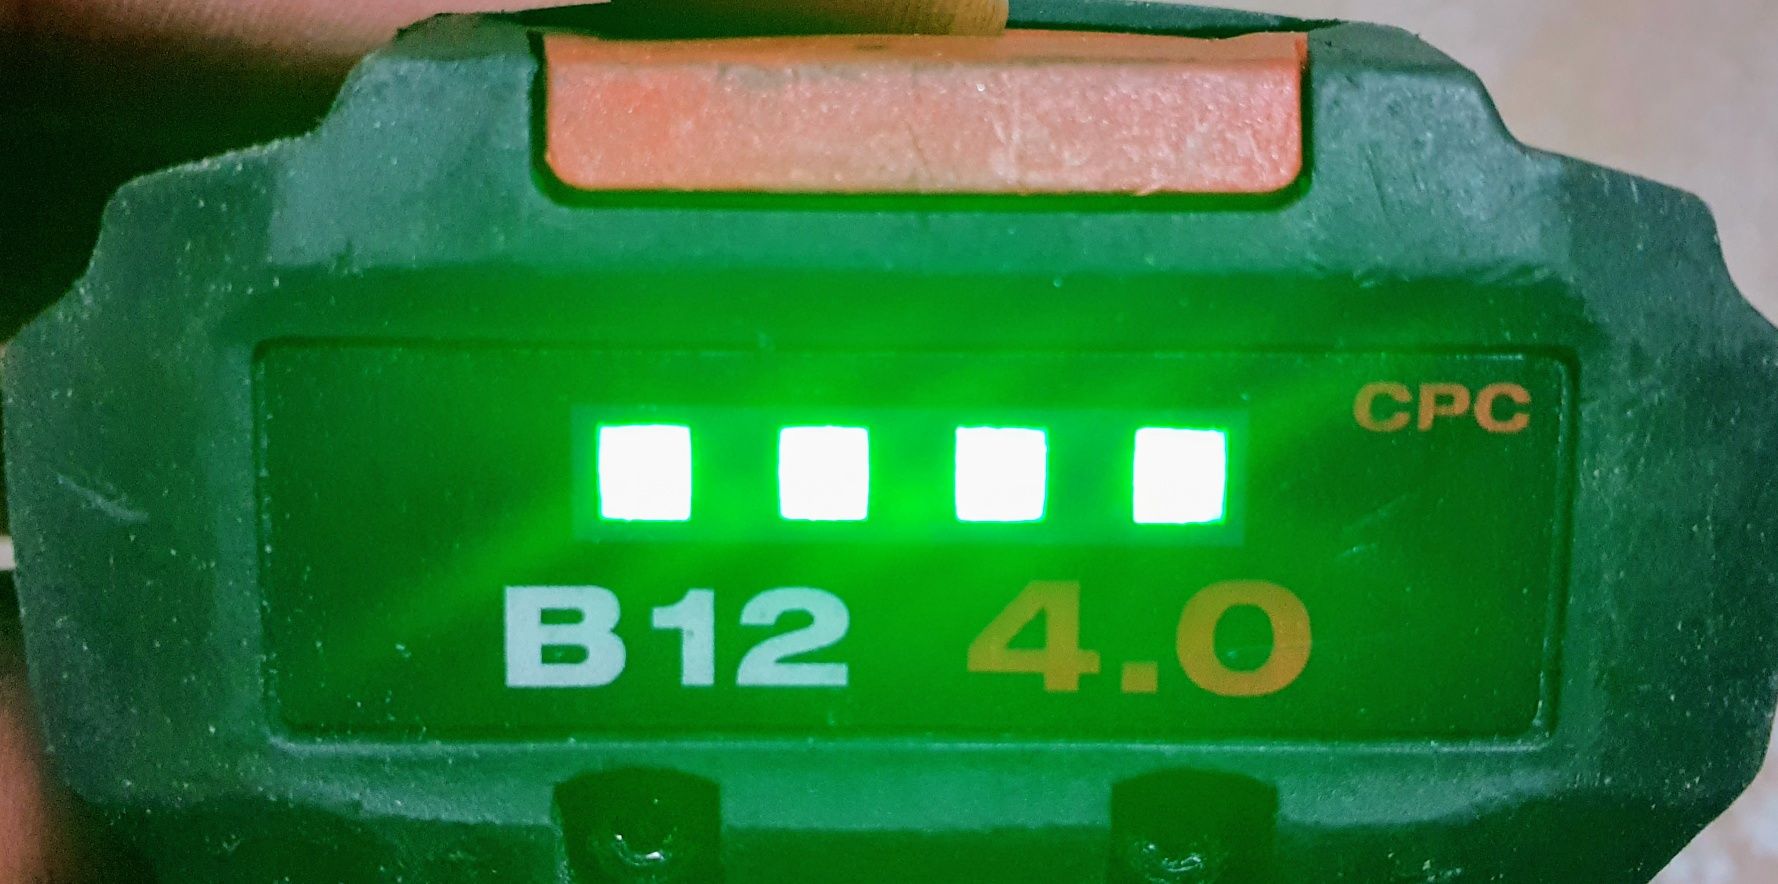 Bateria akumulator CPC Hilti B 12 4.0AH 2020r